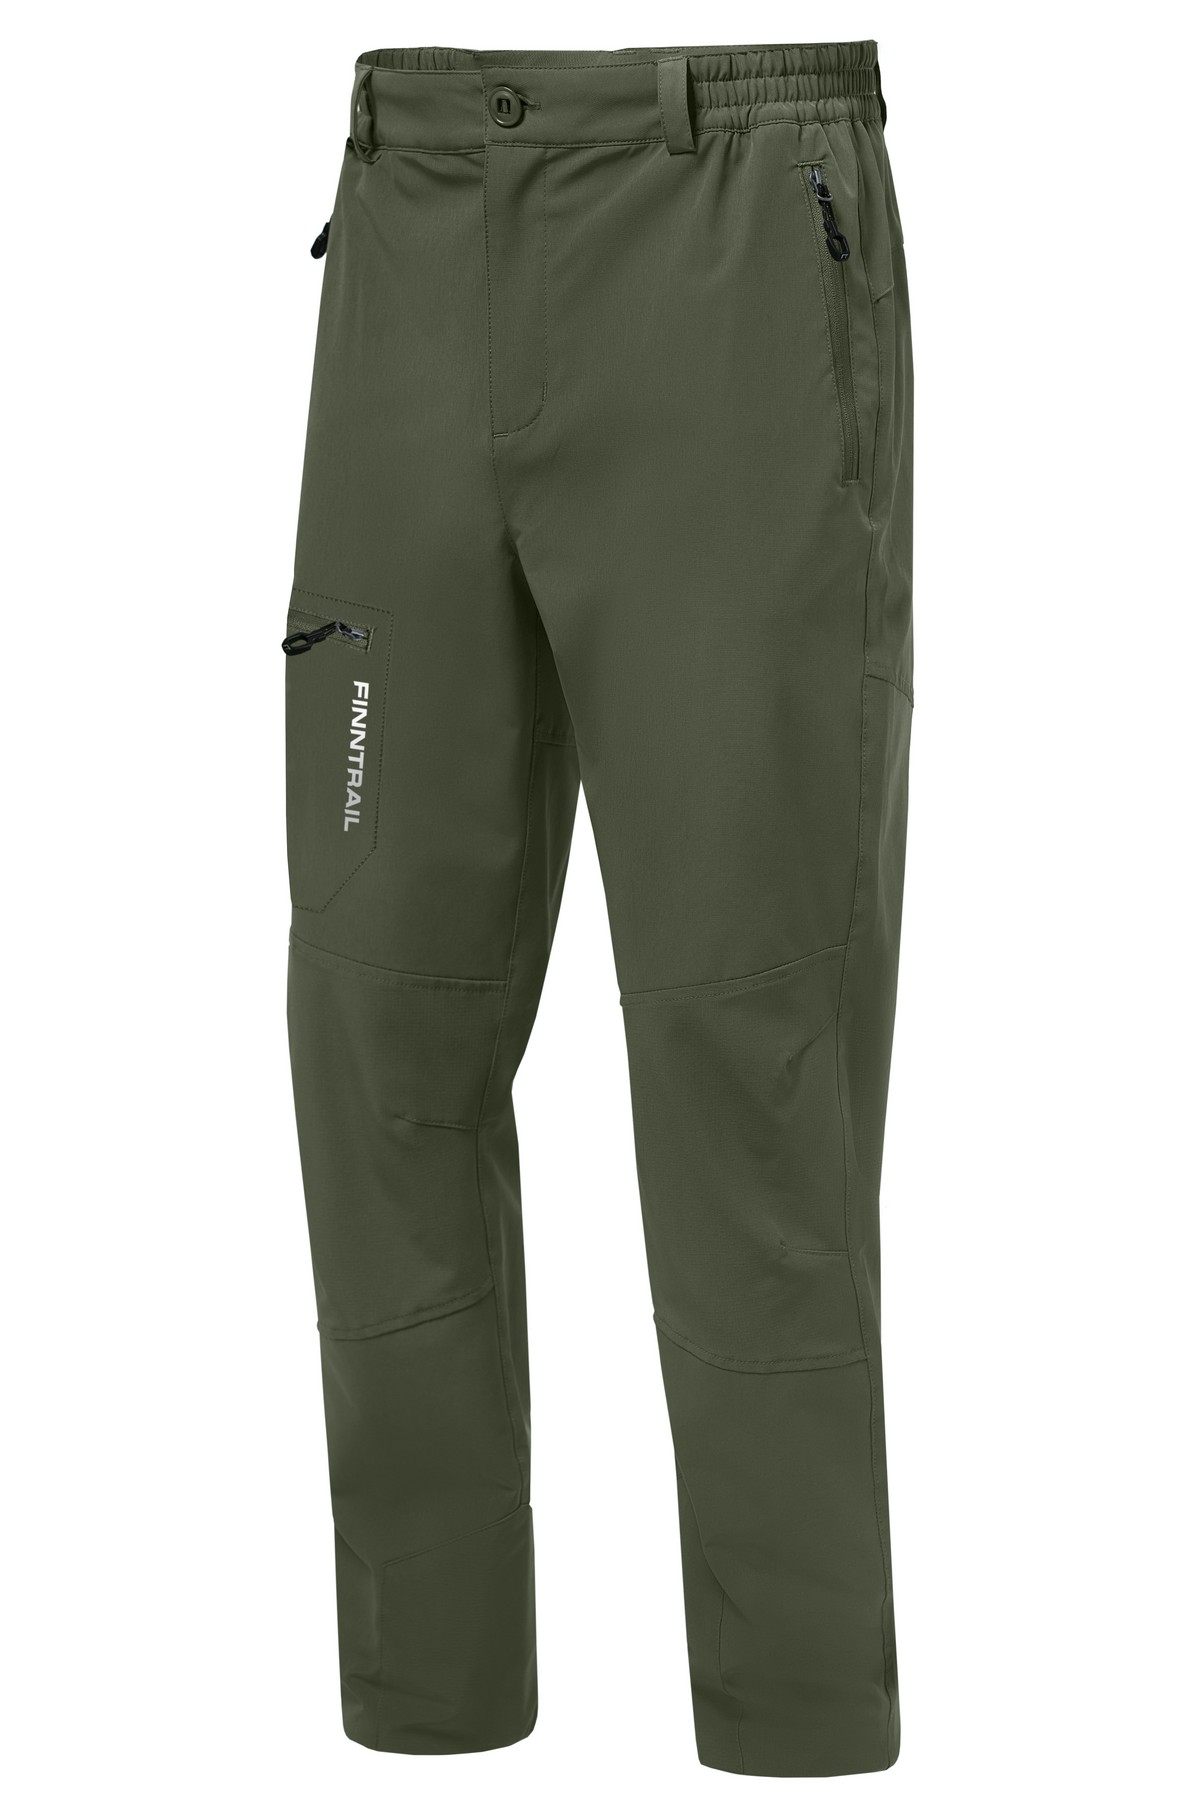 Спортивные брюки мужские Finntrail Wave4608 хаки S